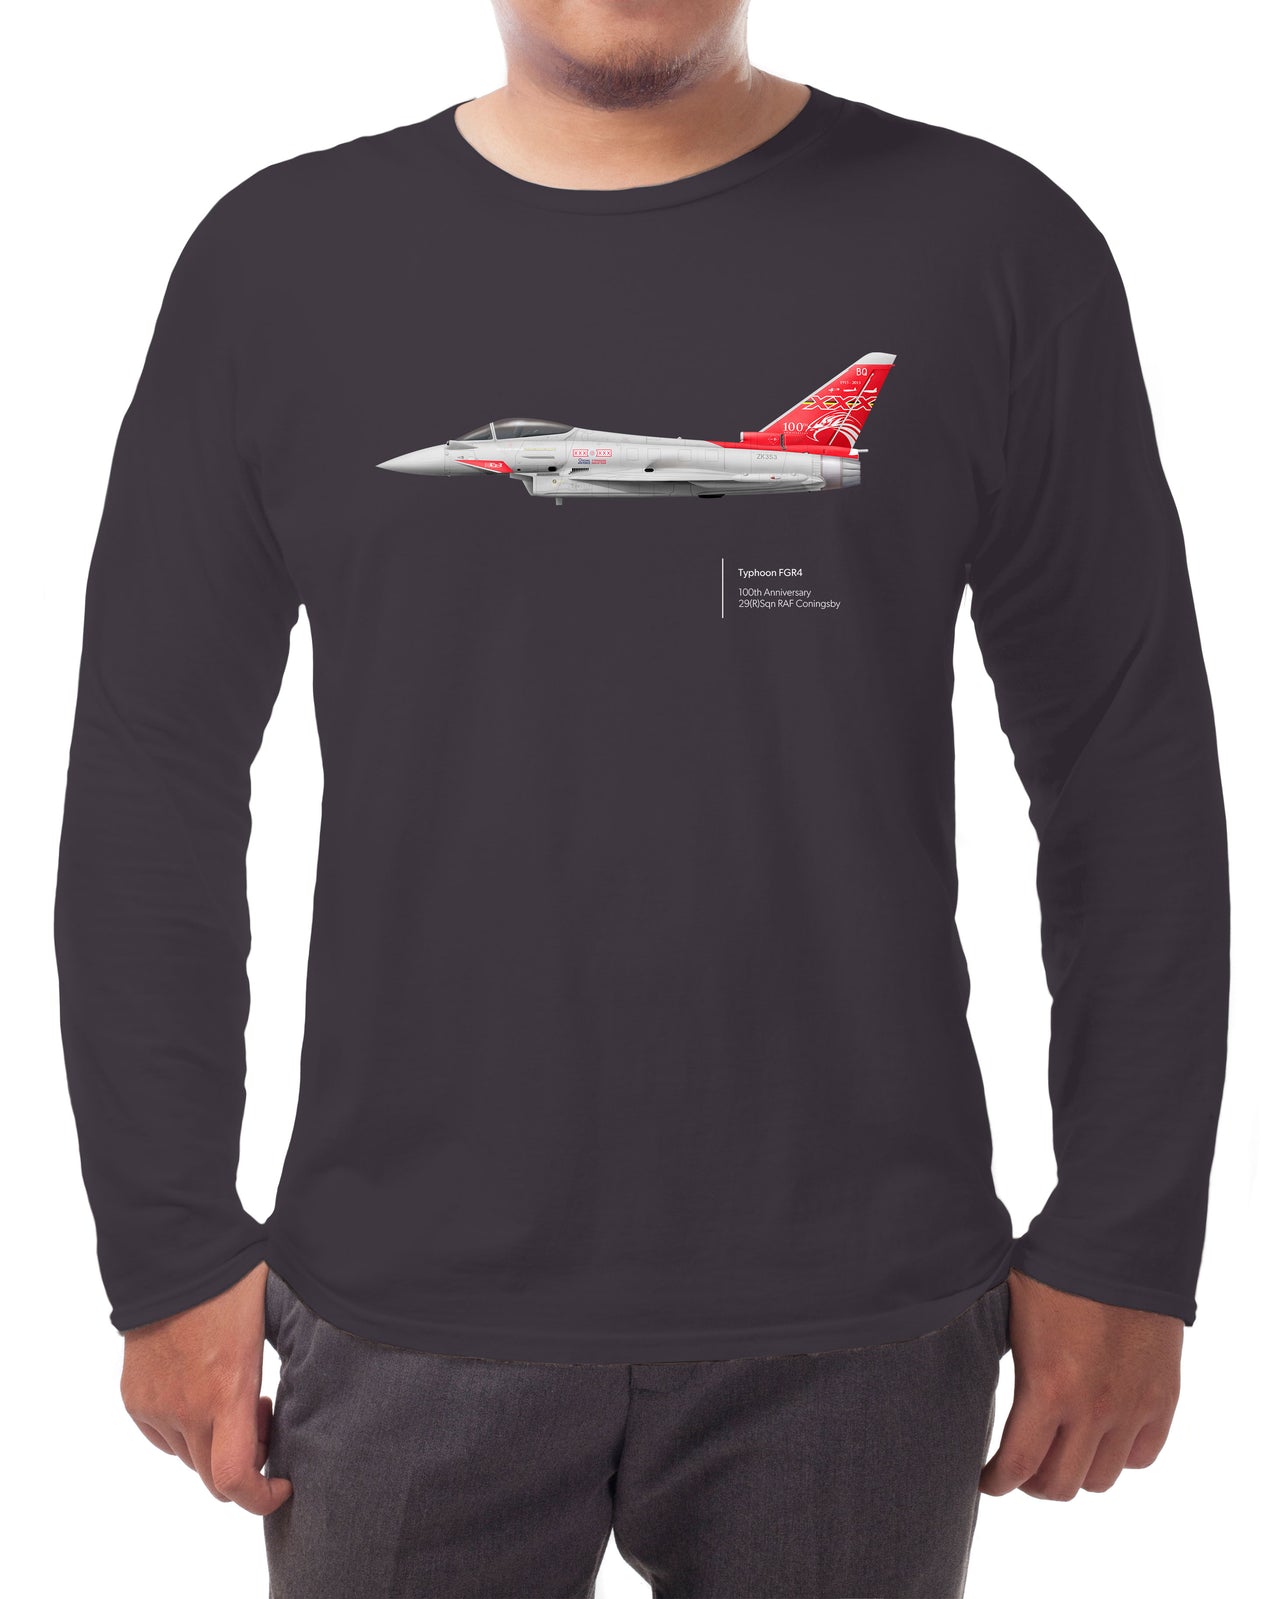 Typhoon FGR4 29SQN - Long-sleeve T-shirt